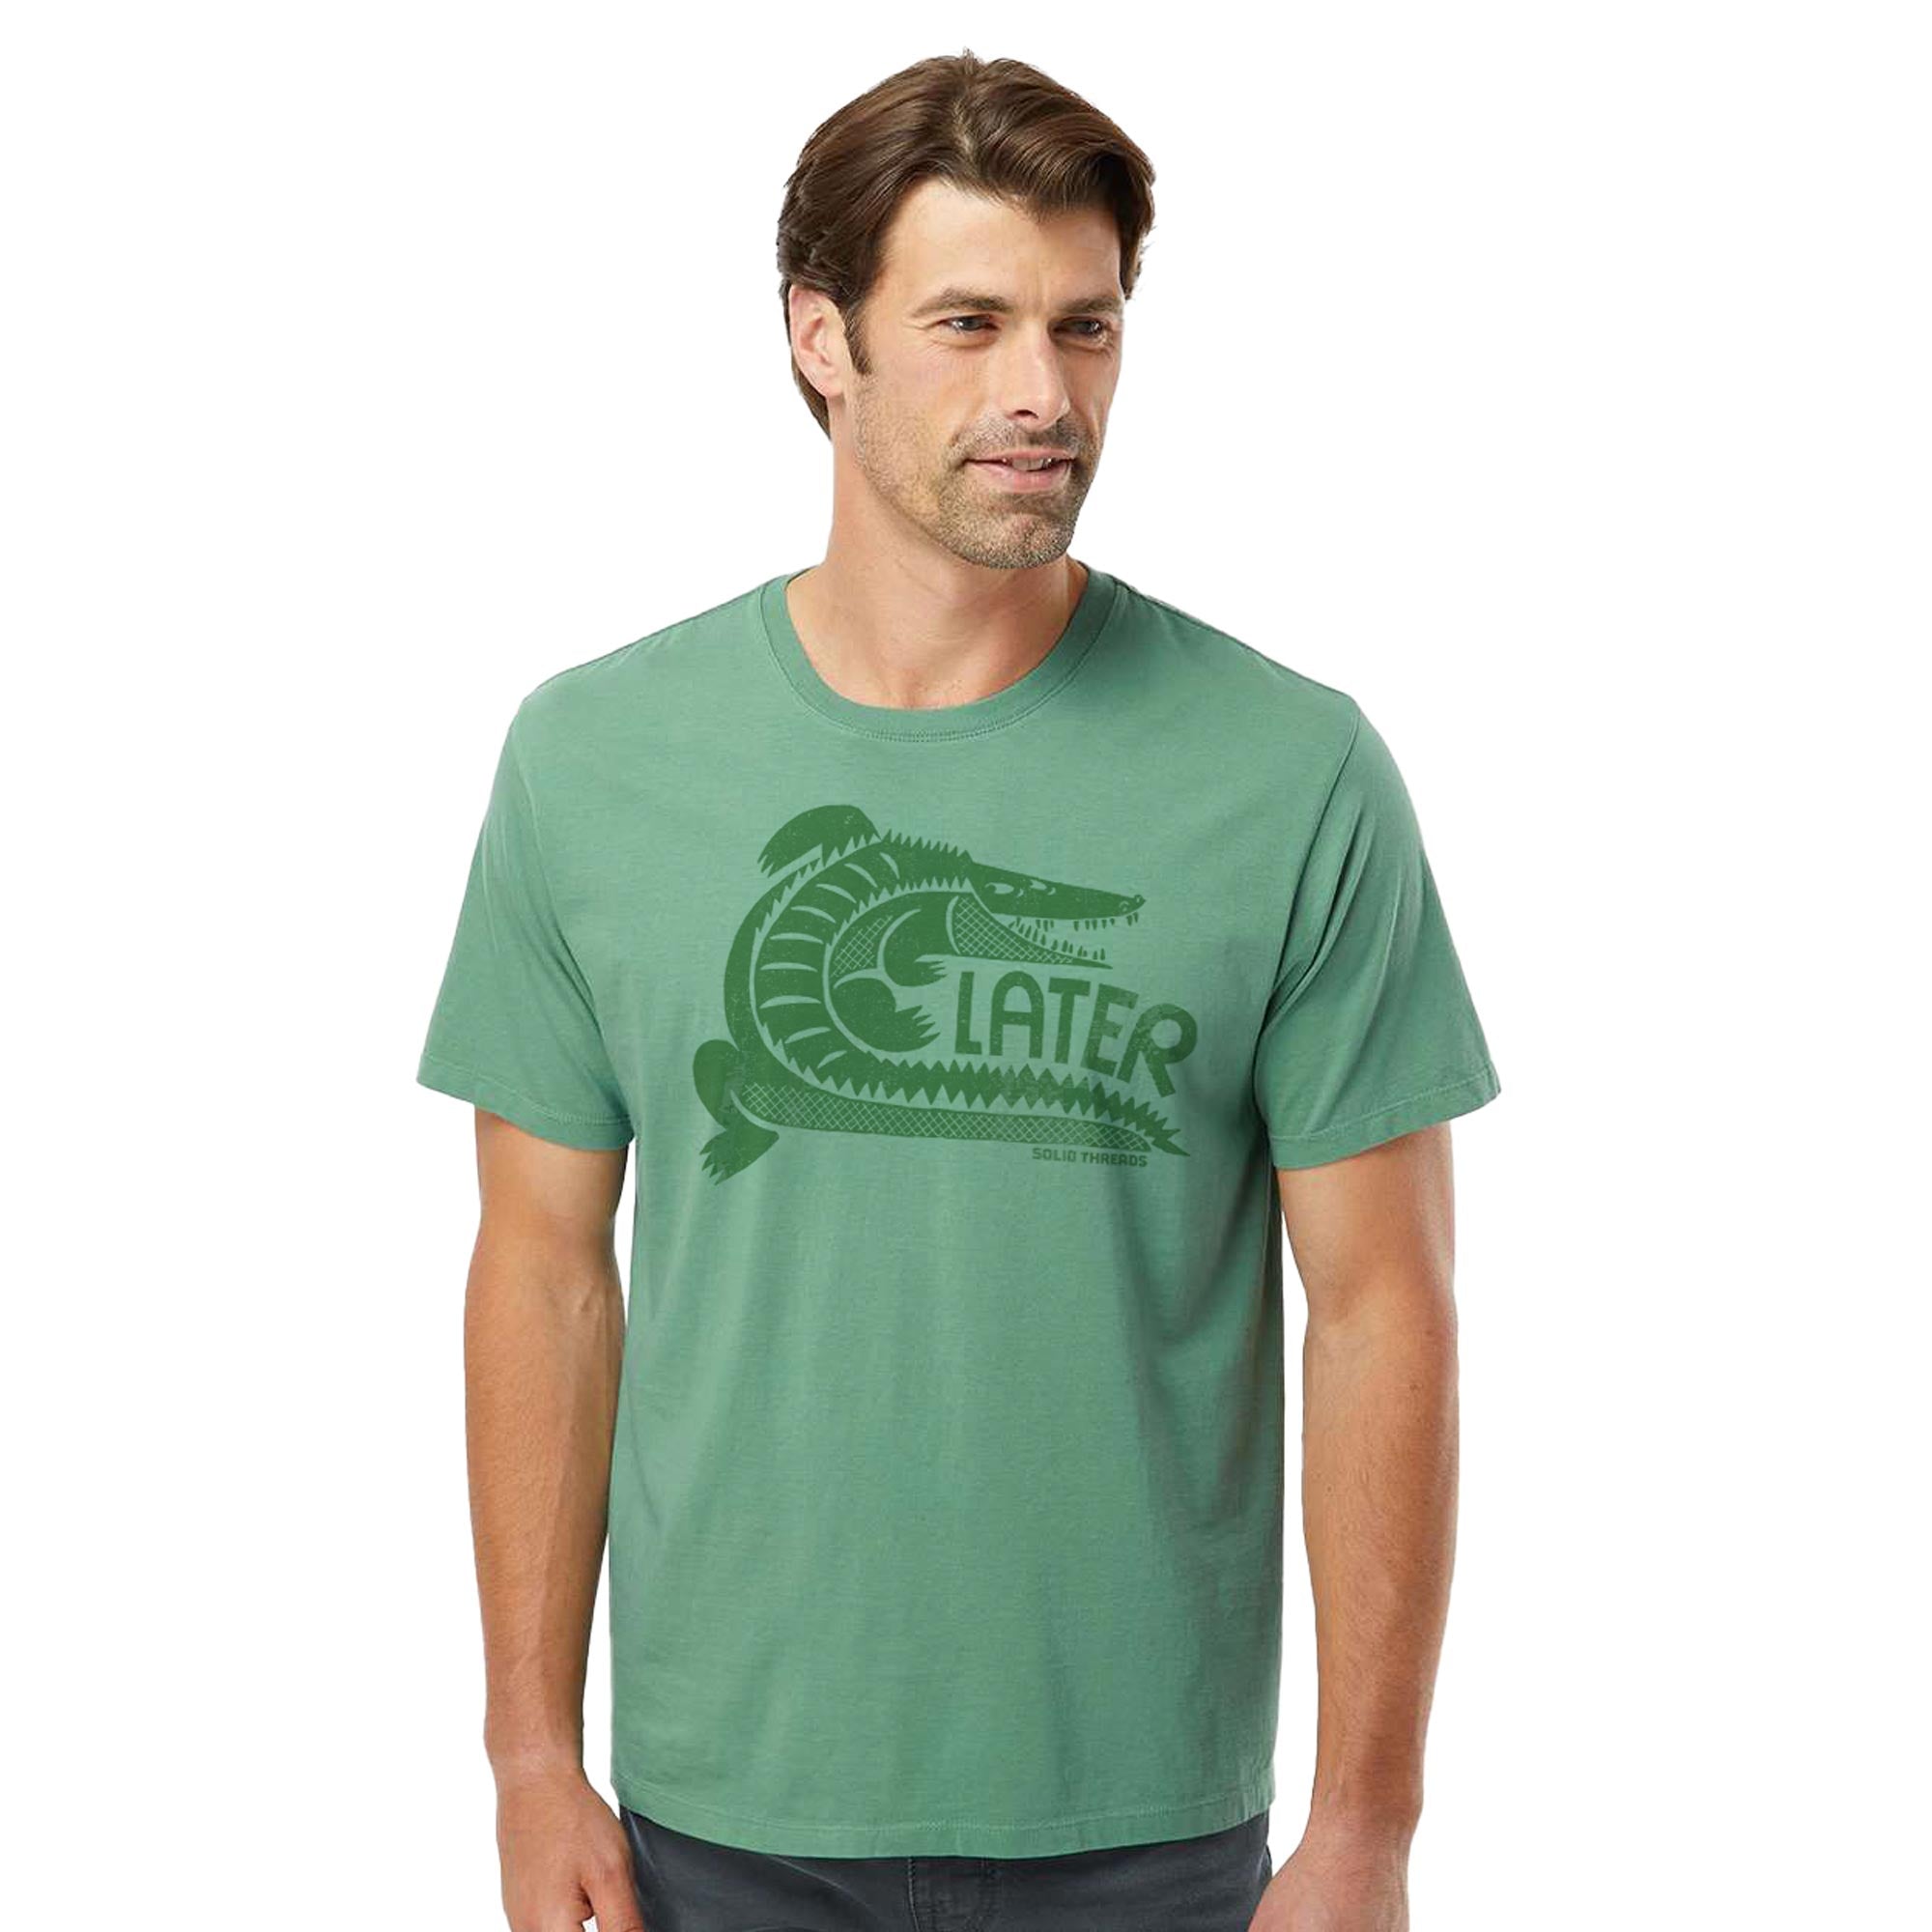 Later Gator Vintage Organic Cotton T-shirt | Cool Animal Beach  Tee | Solid Threads